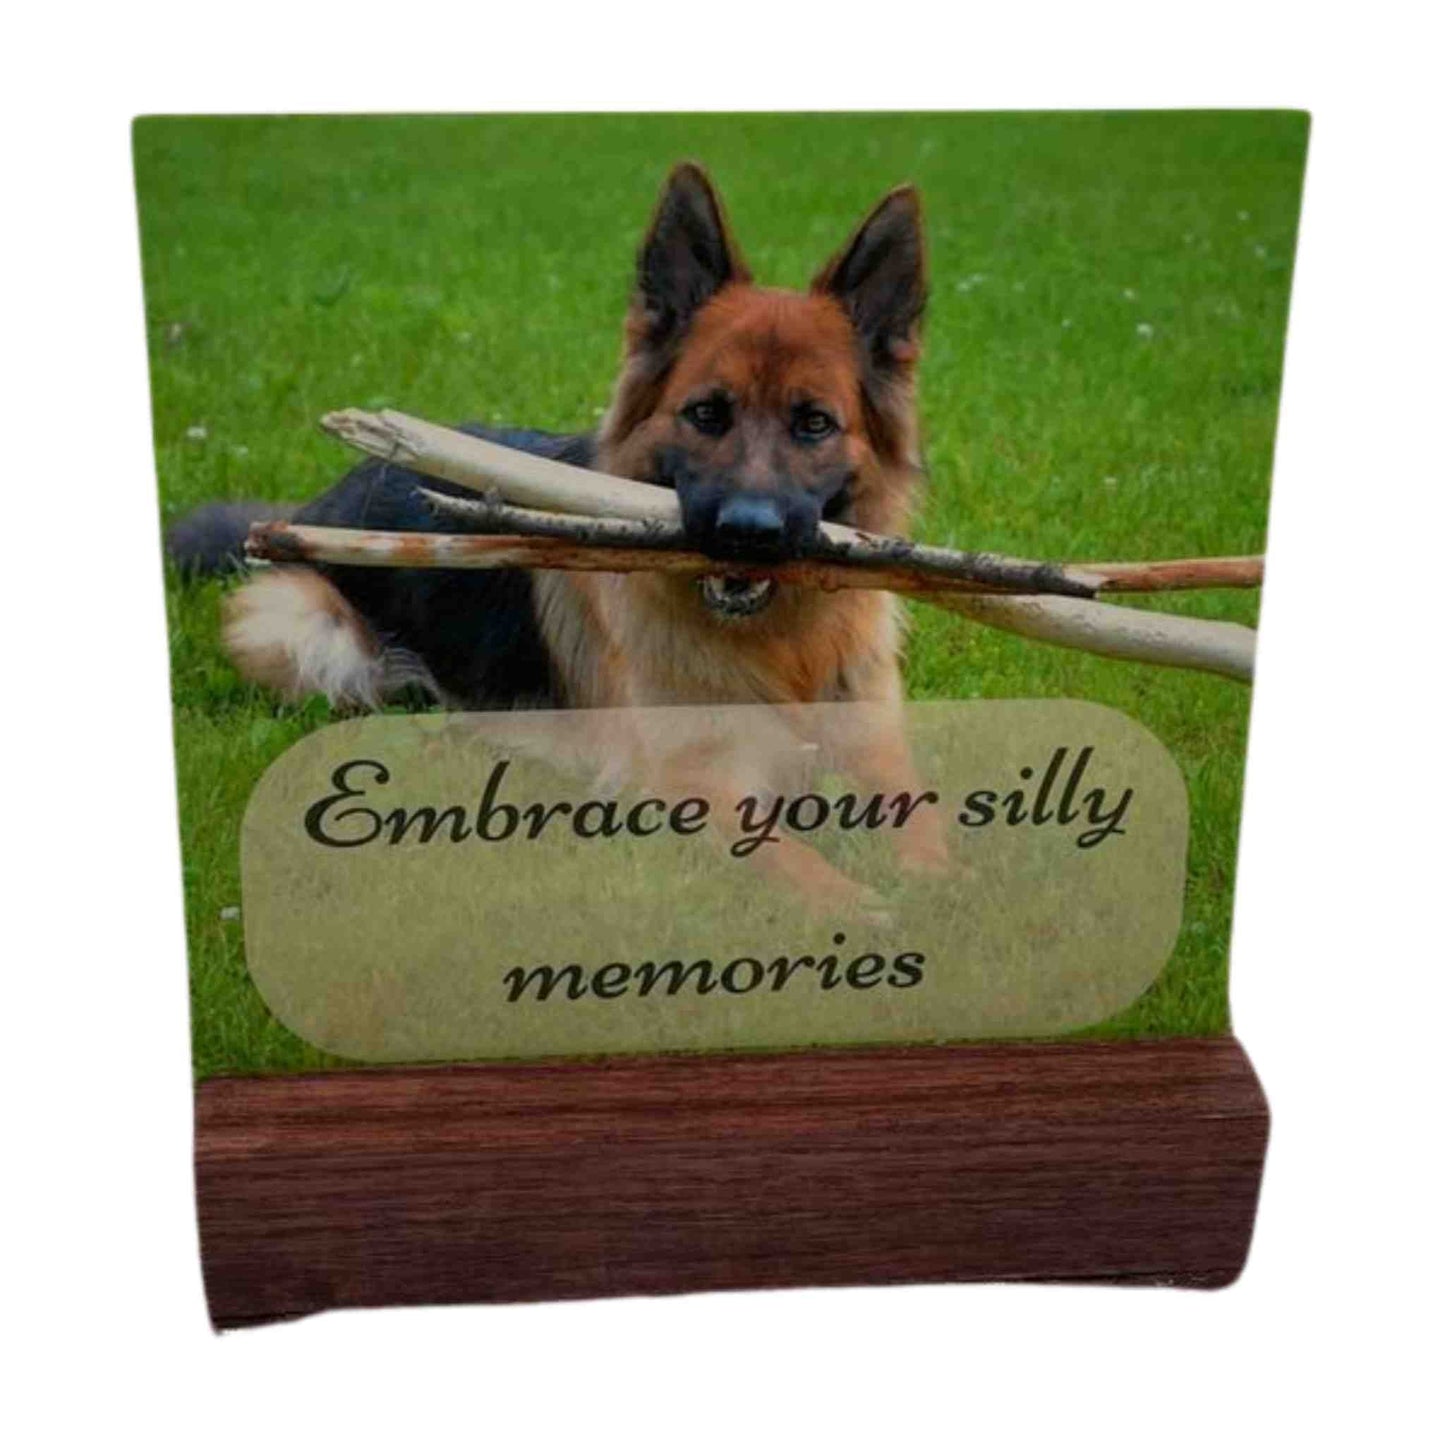 BUSINESS Comfort Card Gift Sets for Pet Loss (12 Sets)